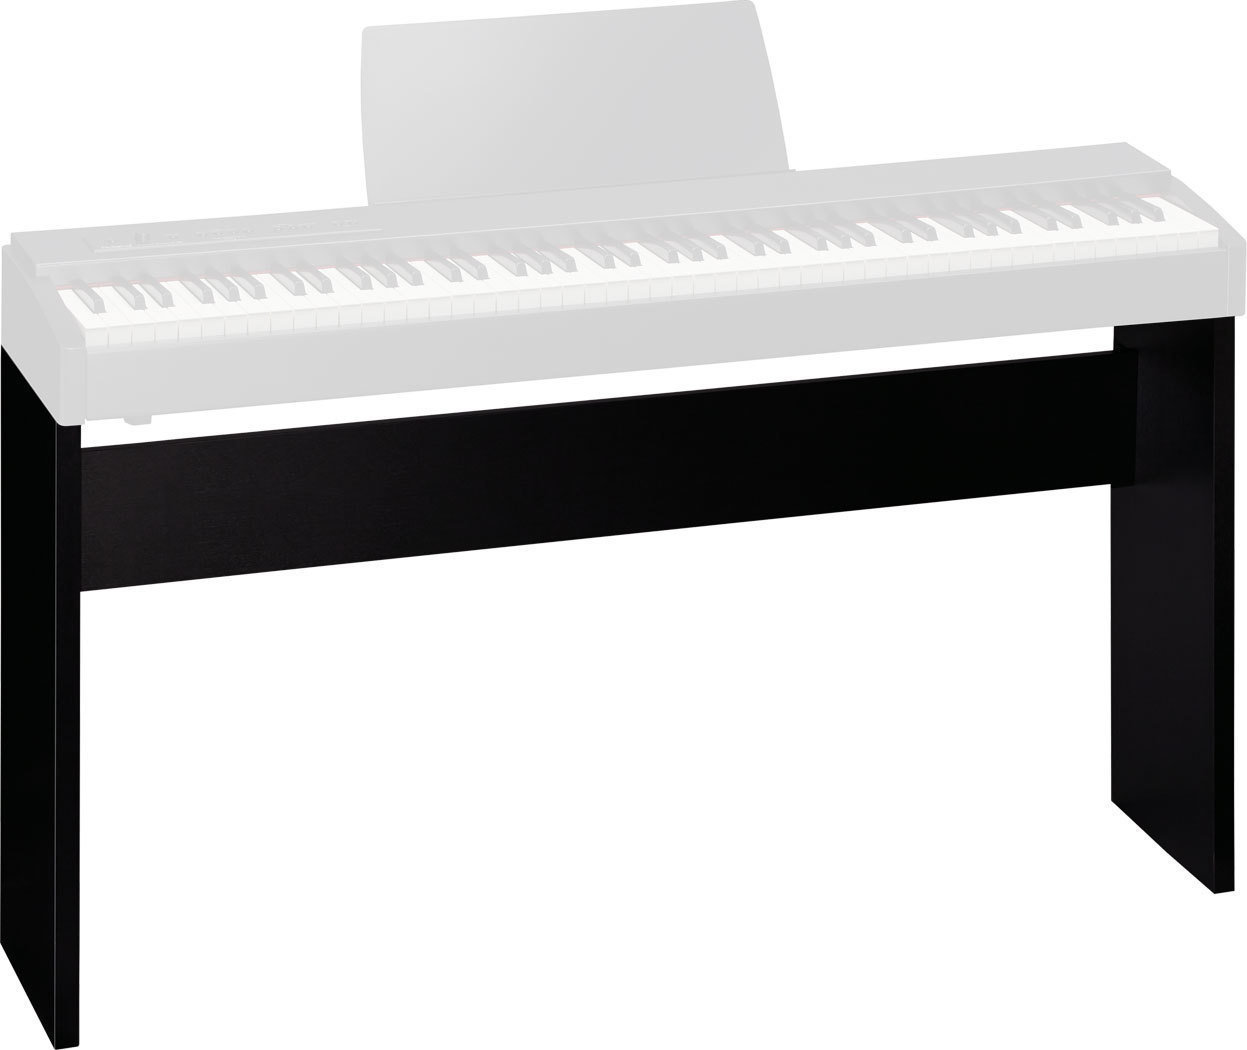 Folding keyboard stand
 Roland KSC68-CB